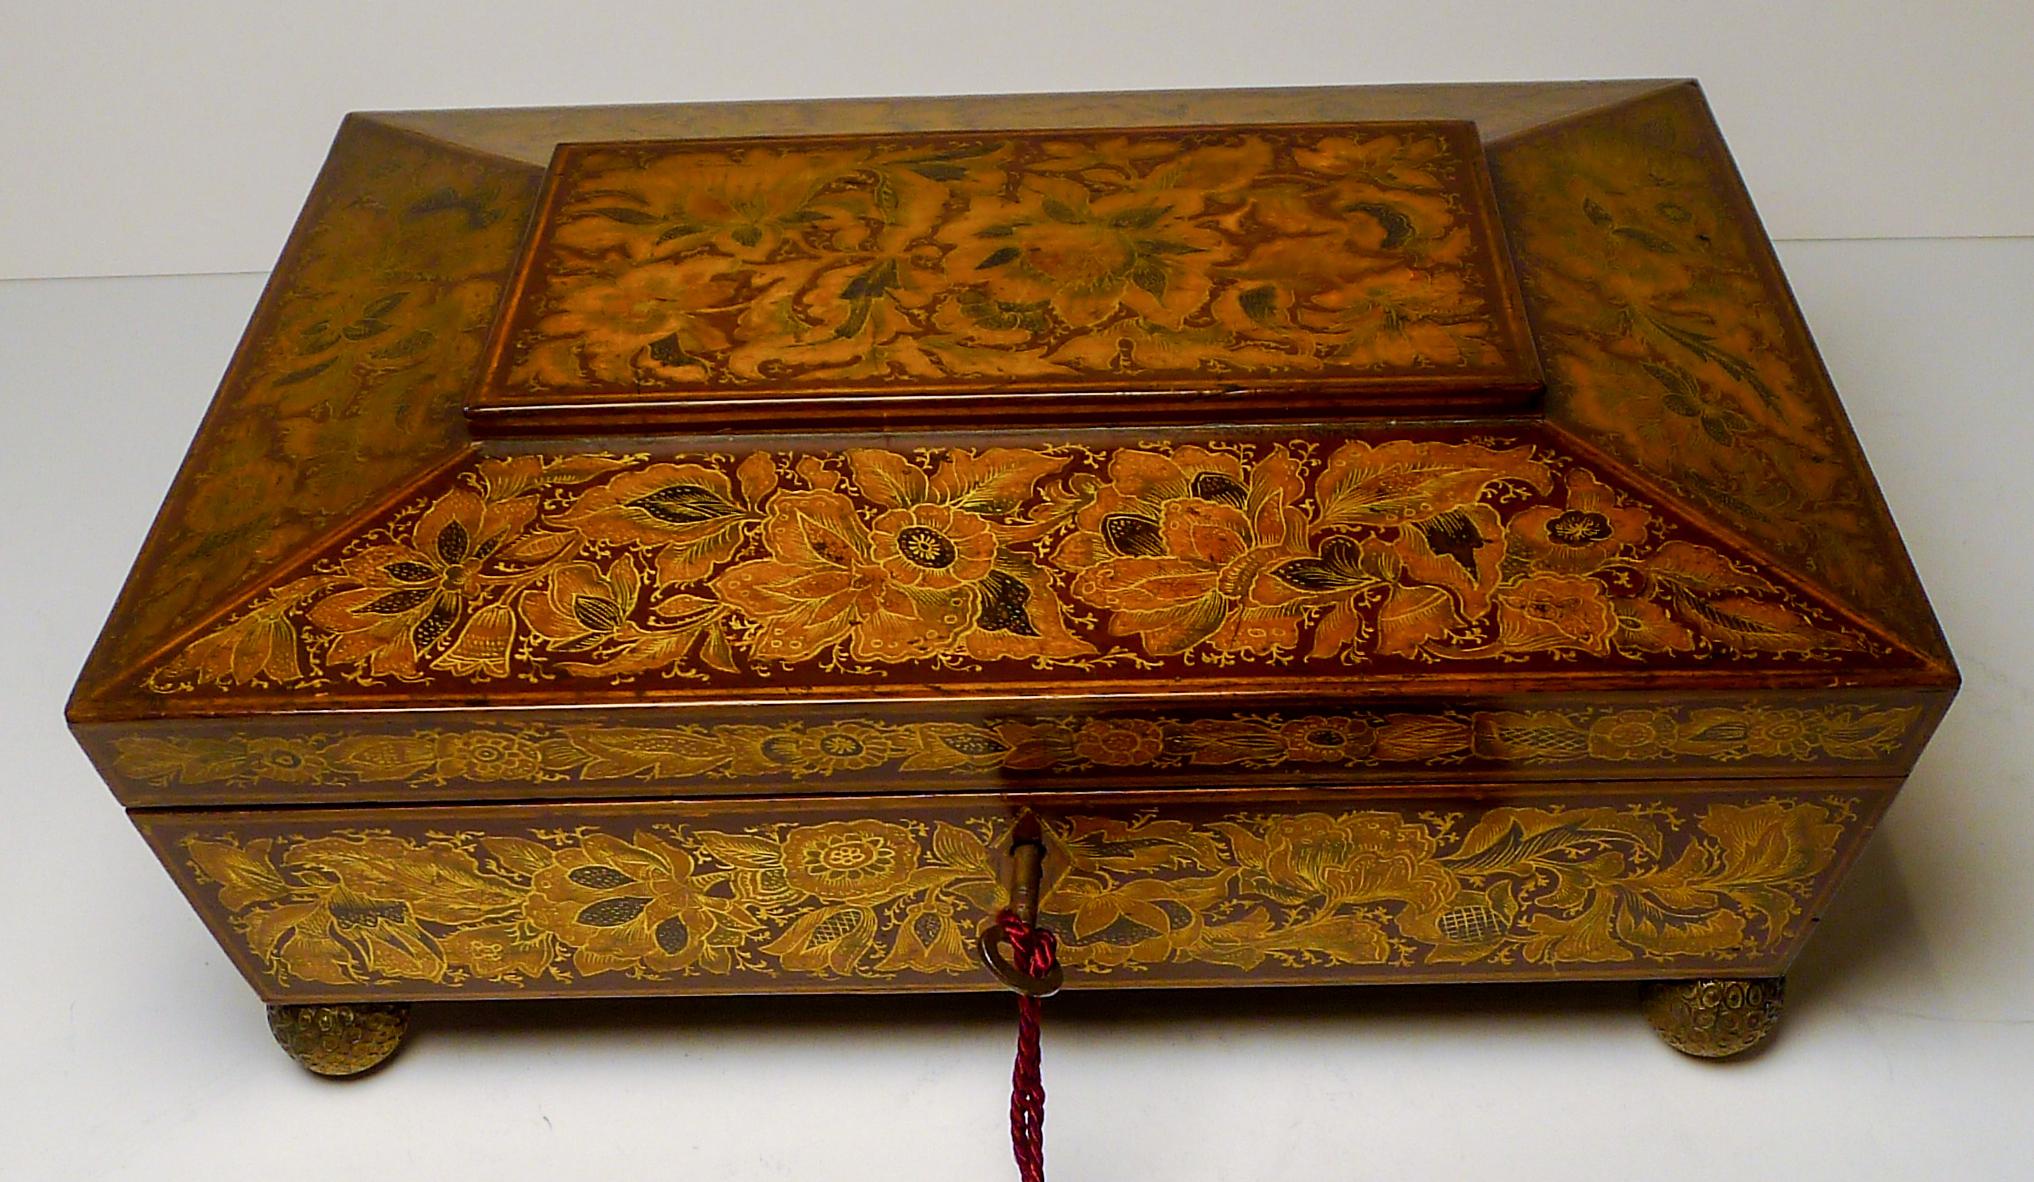 Stunning Antique English Regency Penwork Games Box c.1820 For Sale 1